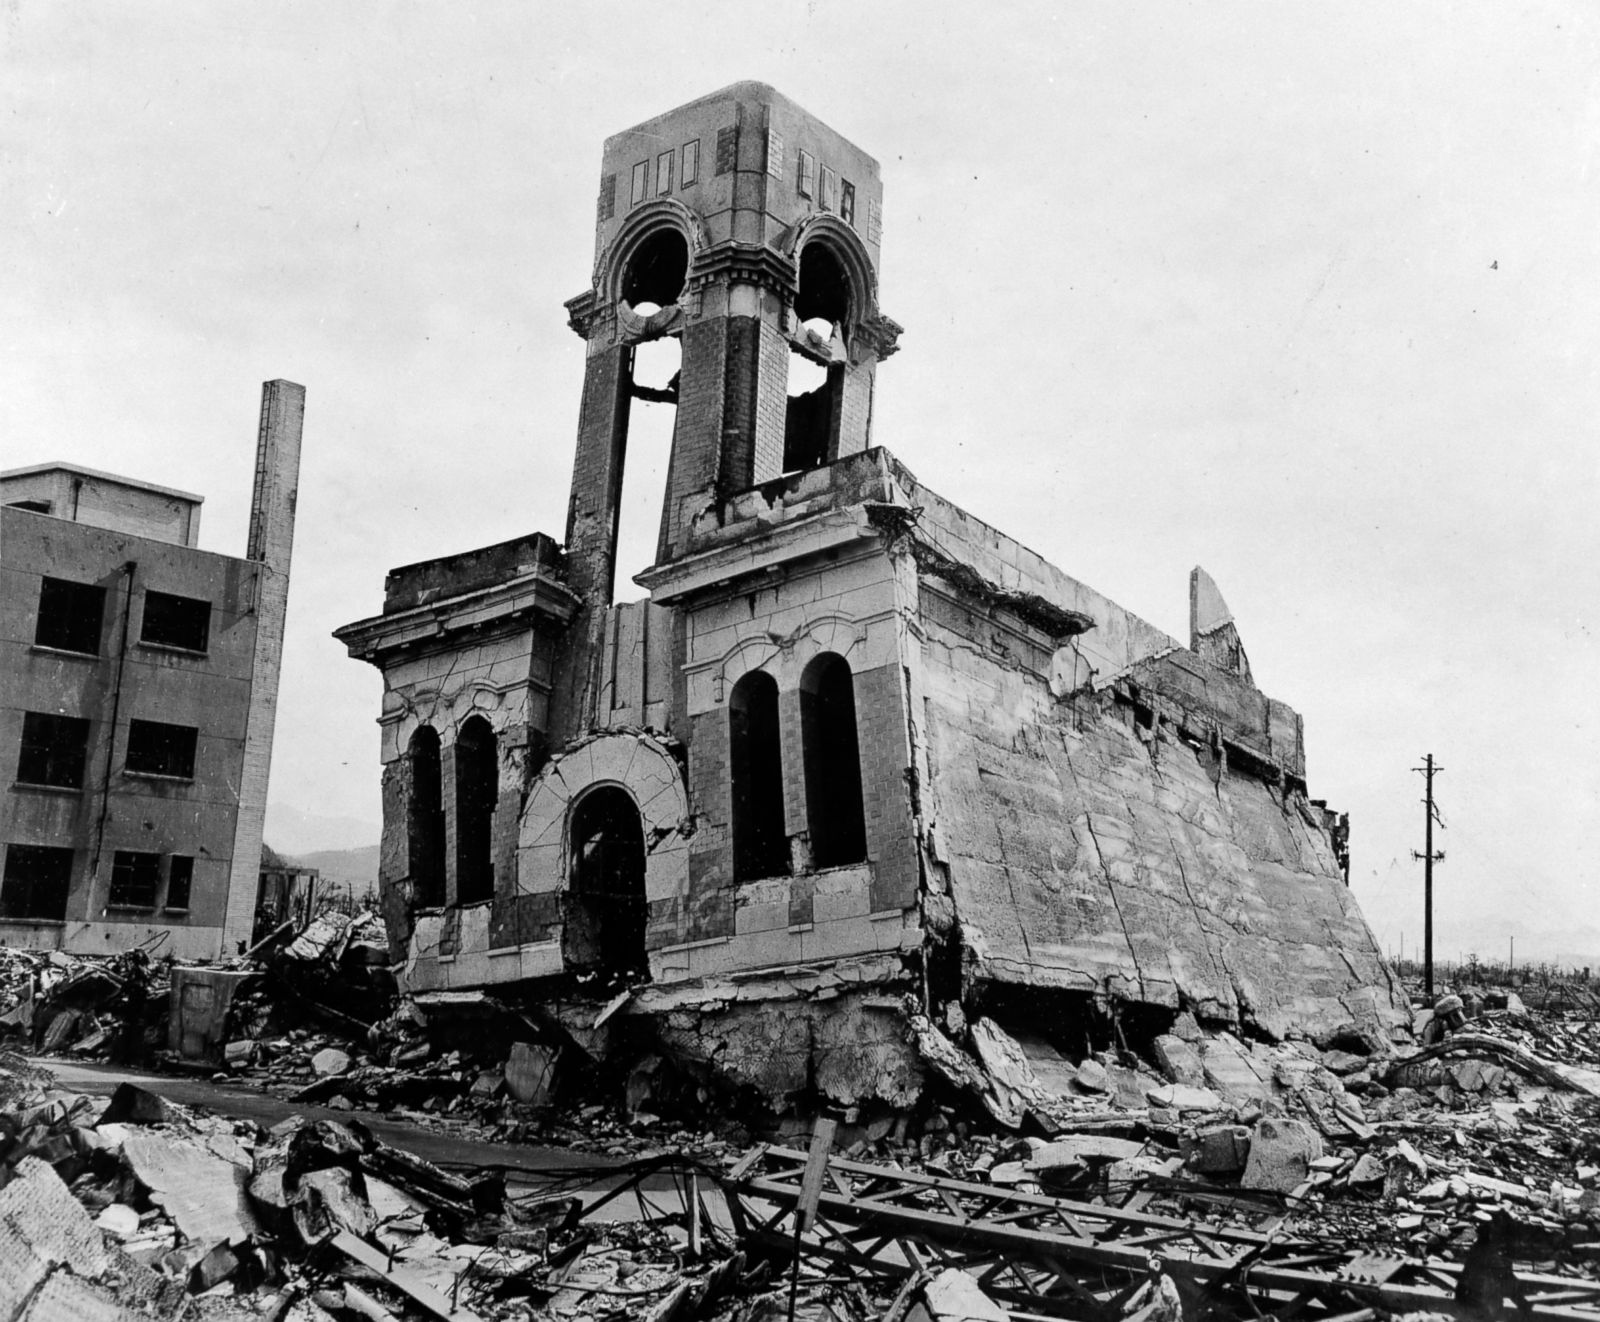 Was Hiroshima Bombing Wrong